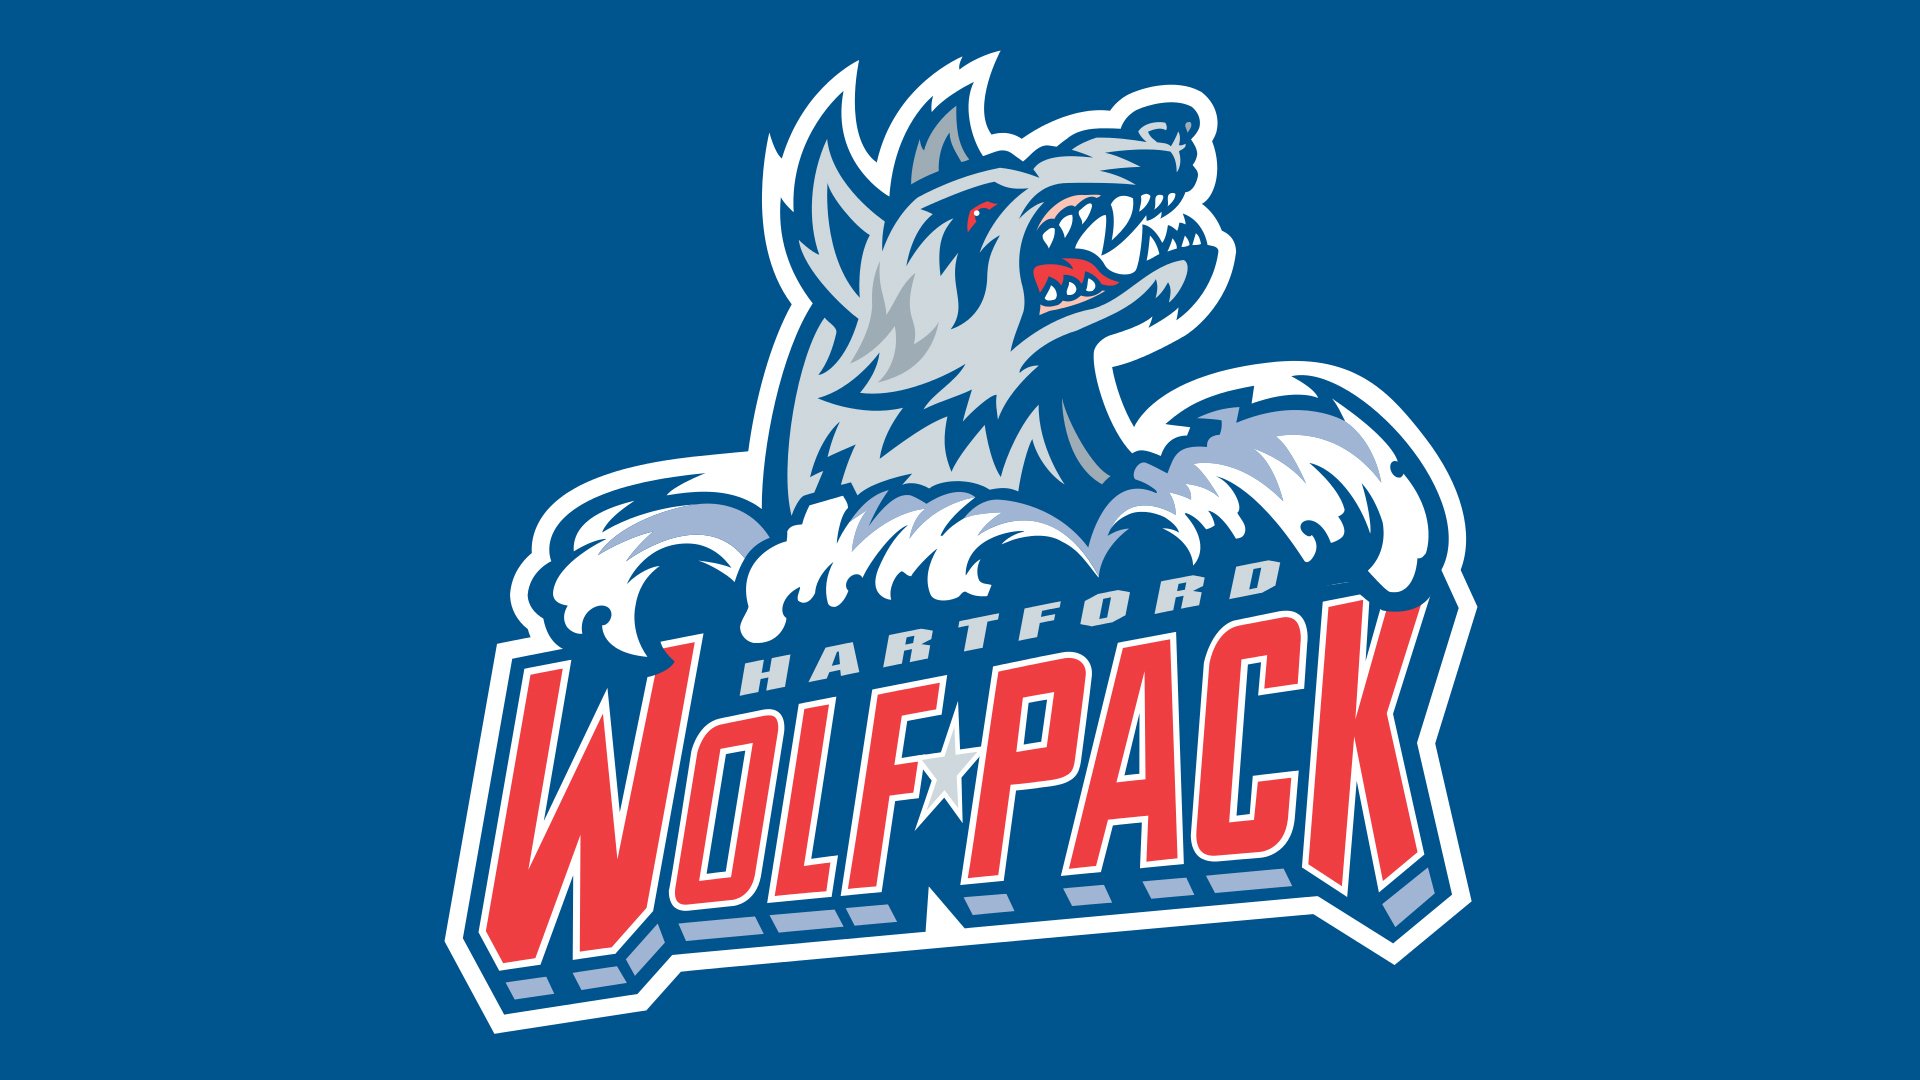 team wolf pack logo